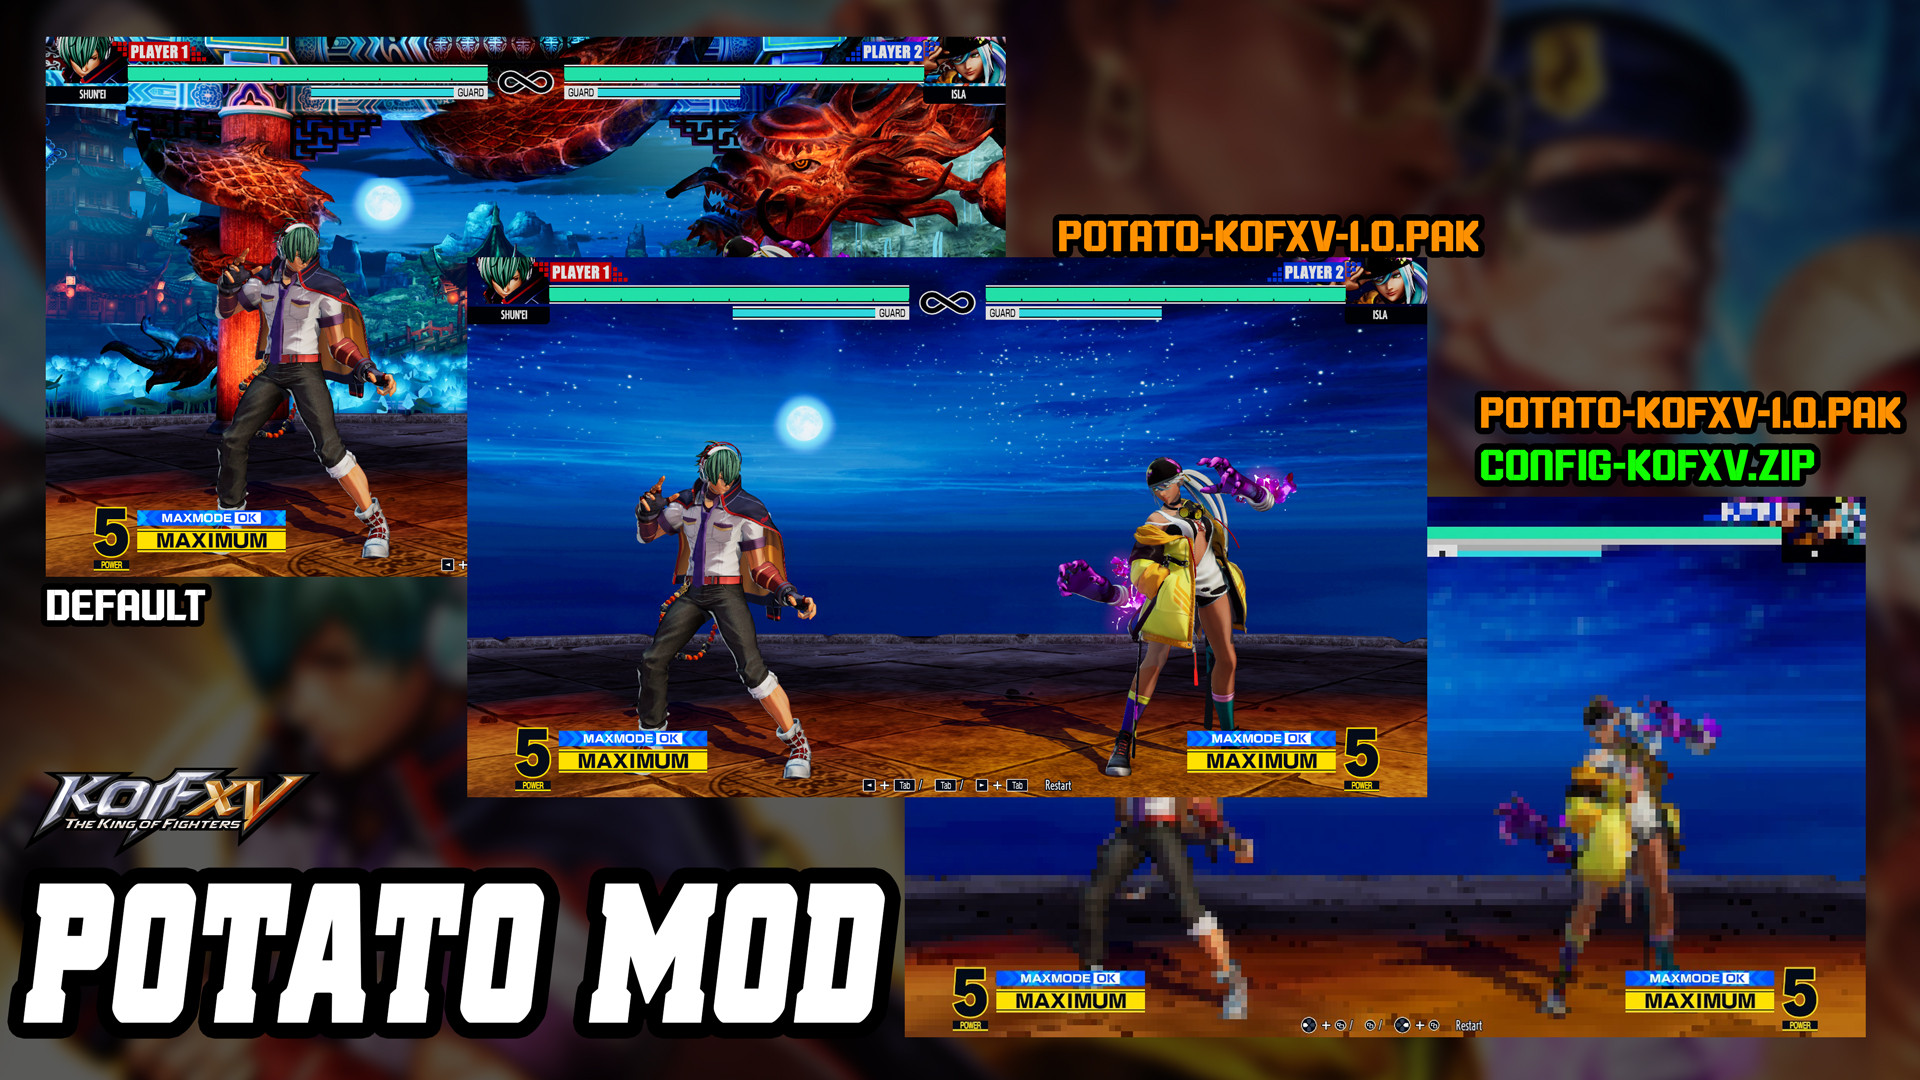 Street Fighter 6 Potato Mod [Street Fighter 6] [Mods]